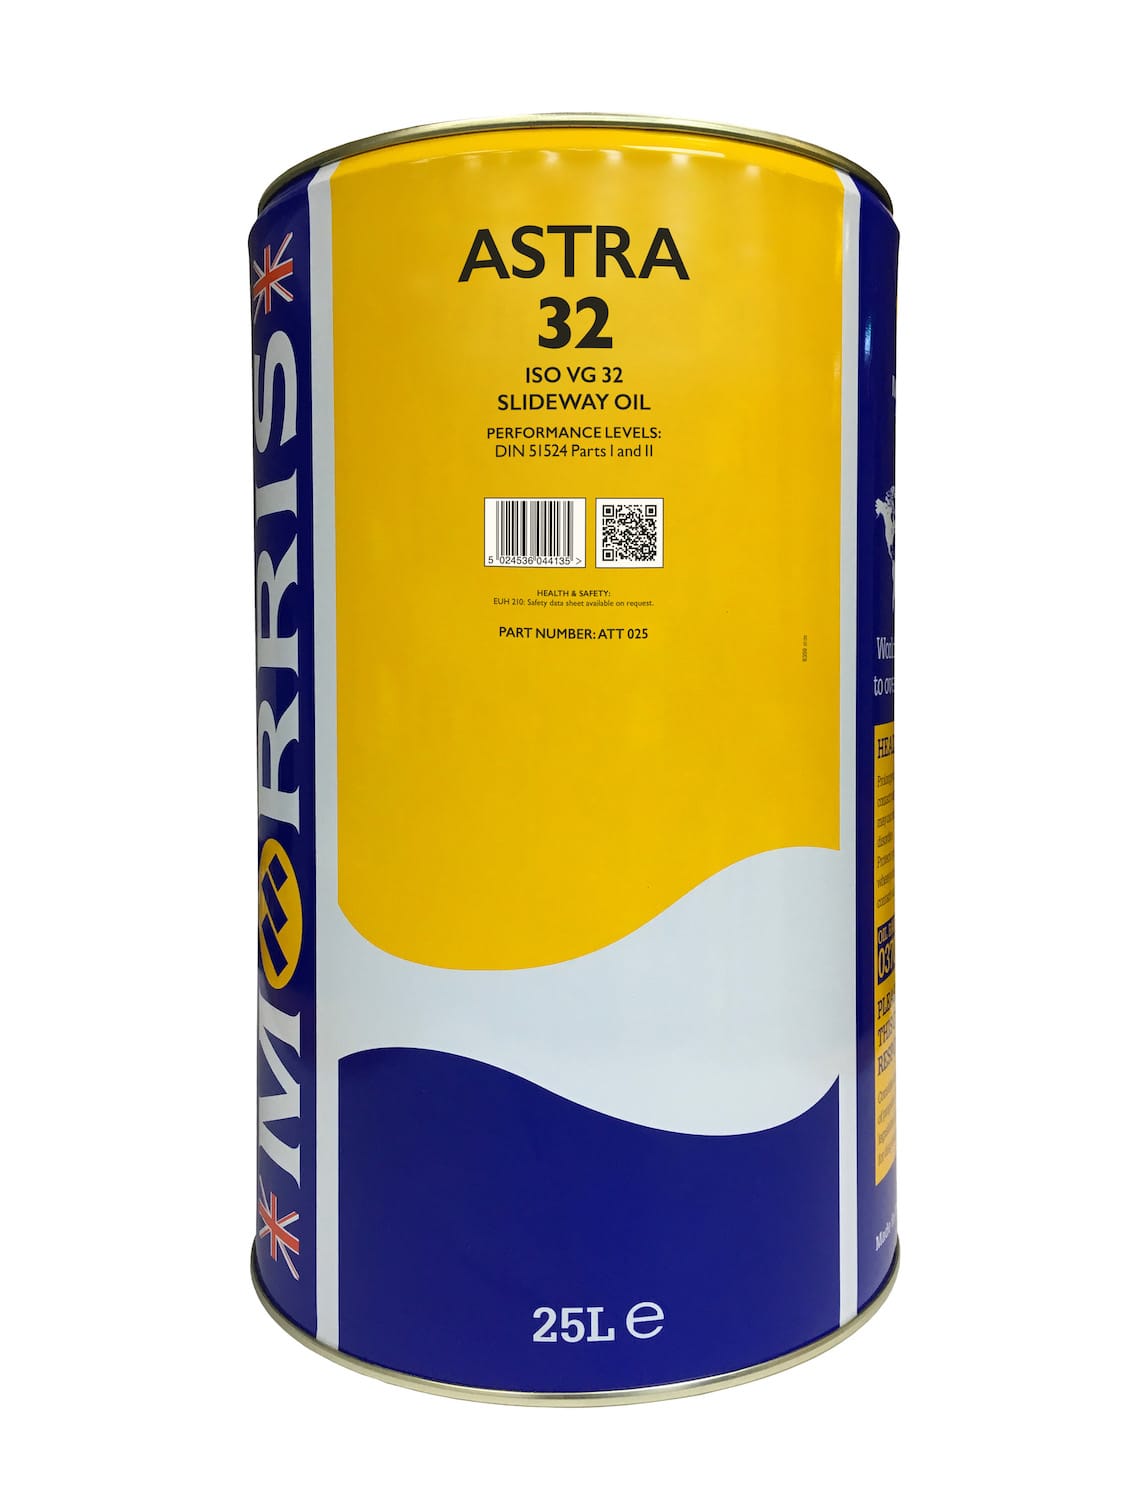 Astra 32 Slideway Oil